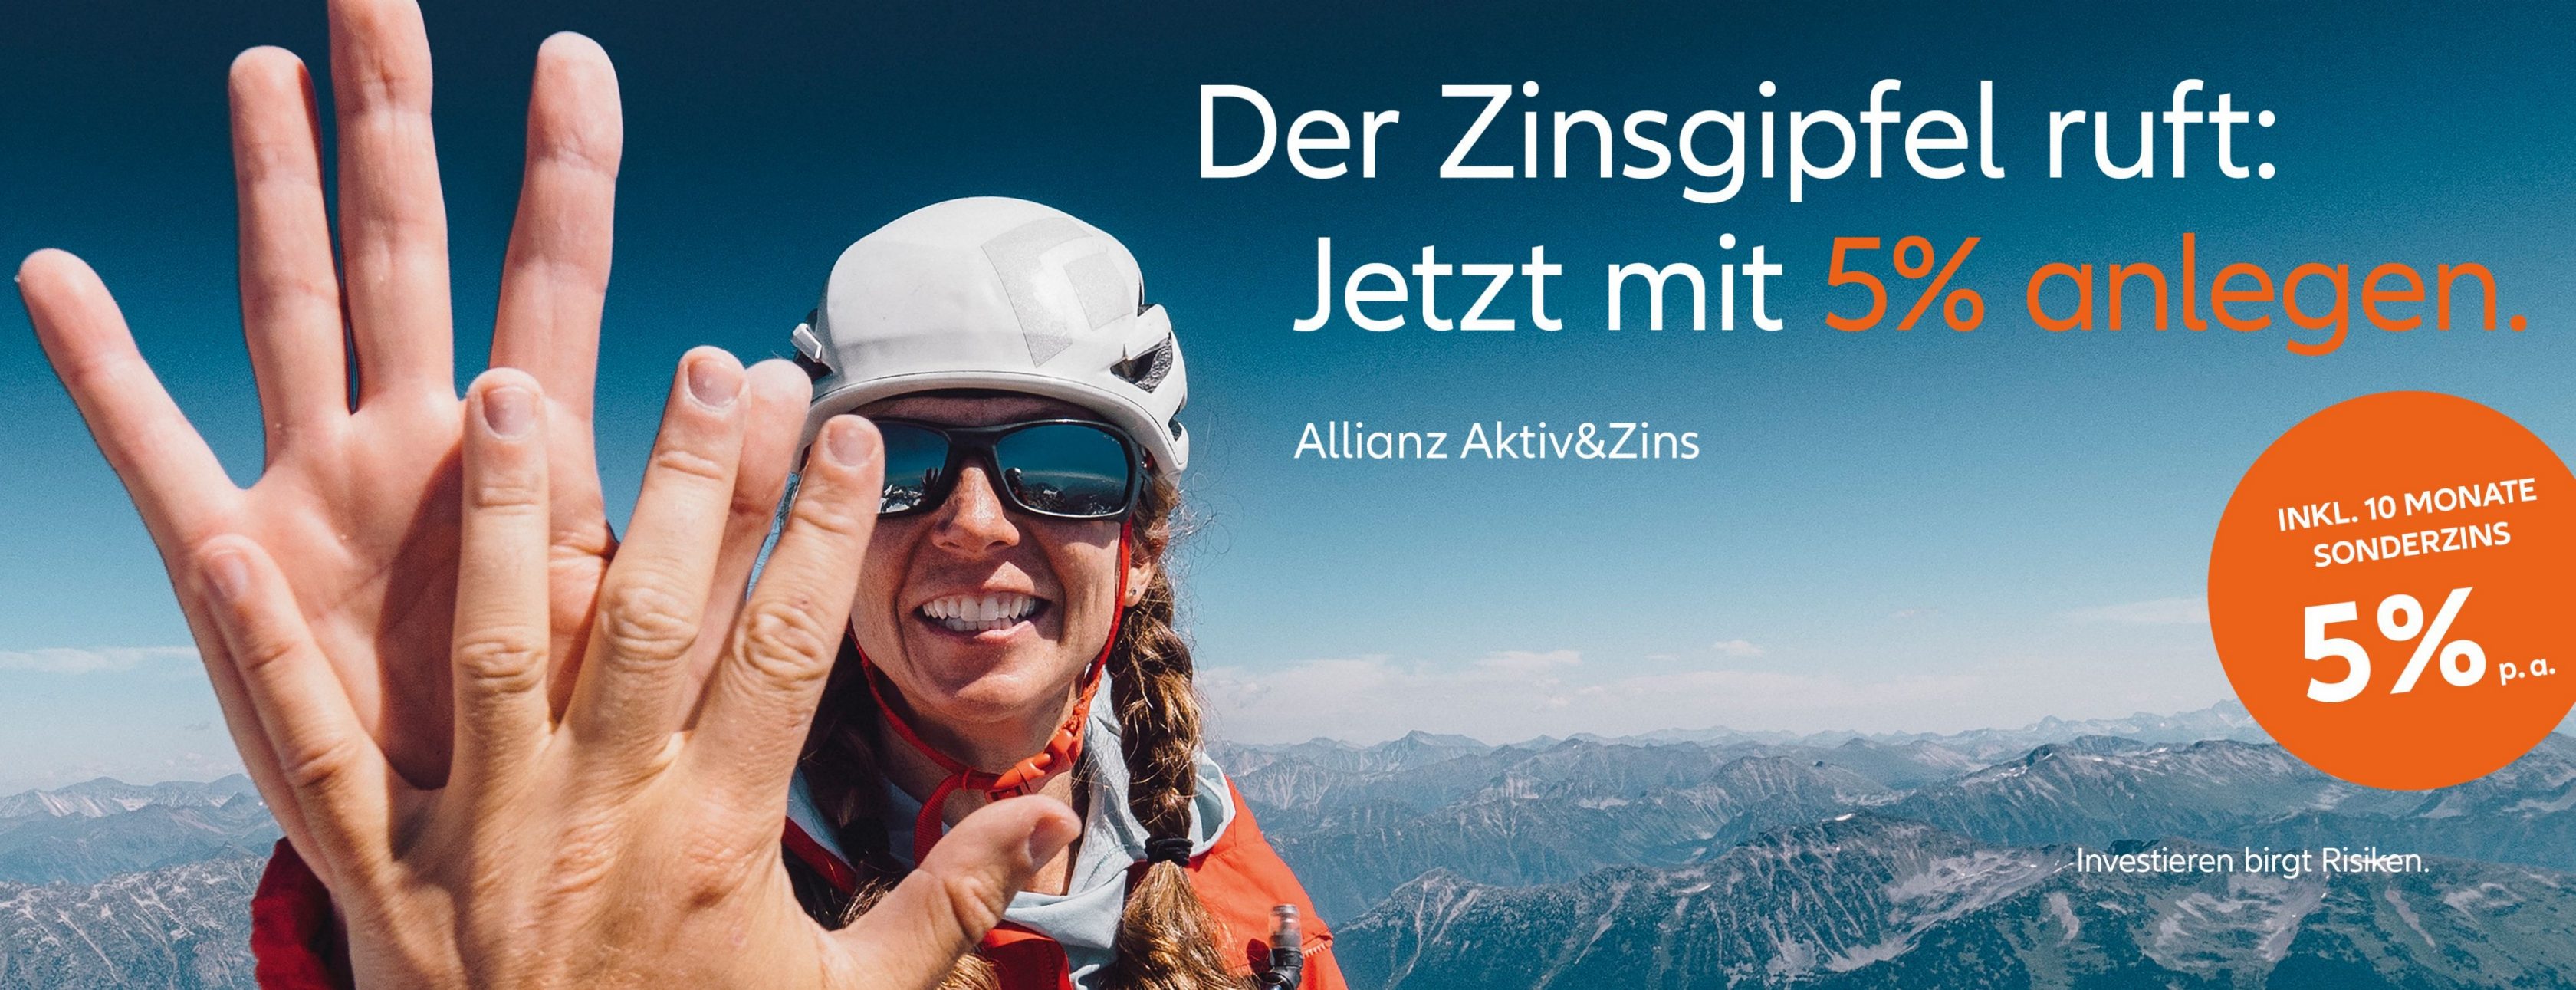 Allianz Versicherung Michael Stark-Ahl Iphofen - https://www.allianz-vor-ort.de/landingpage/zsm/man